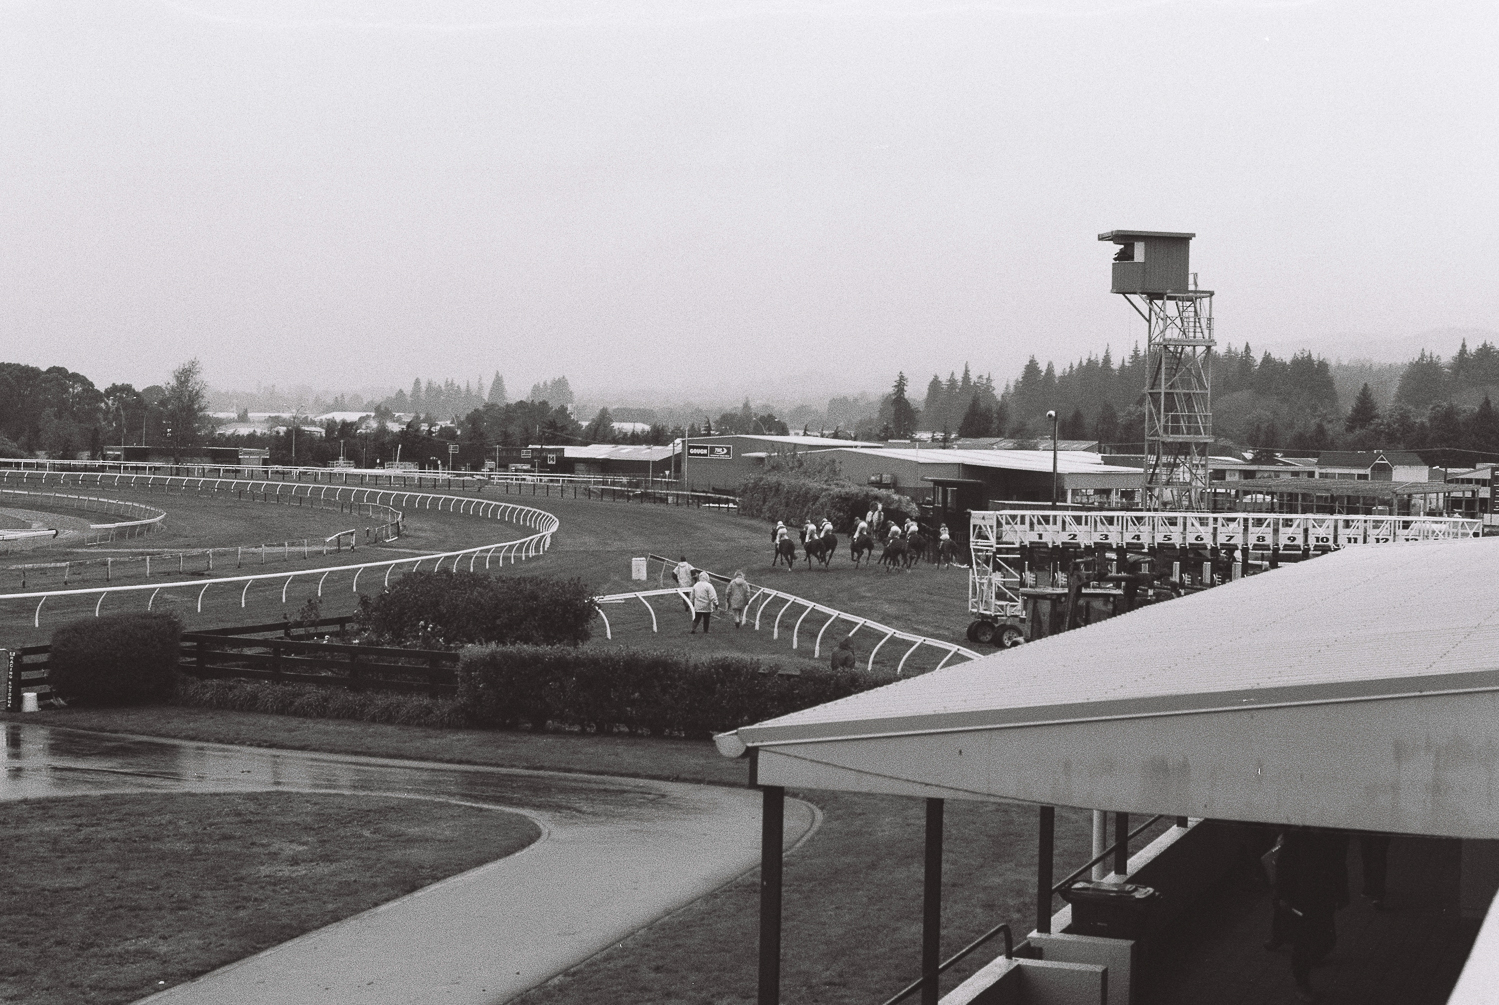  Race start, Rotorua Racecourse, April 2019 